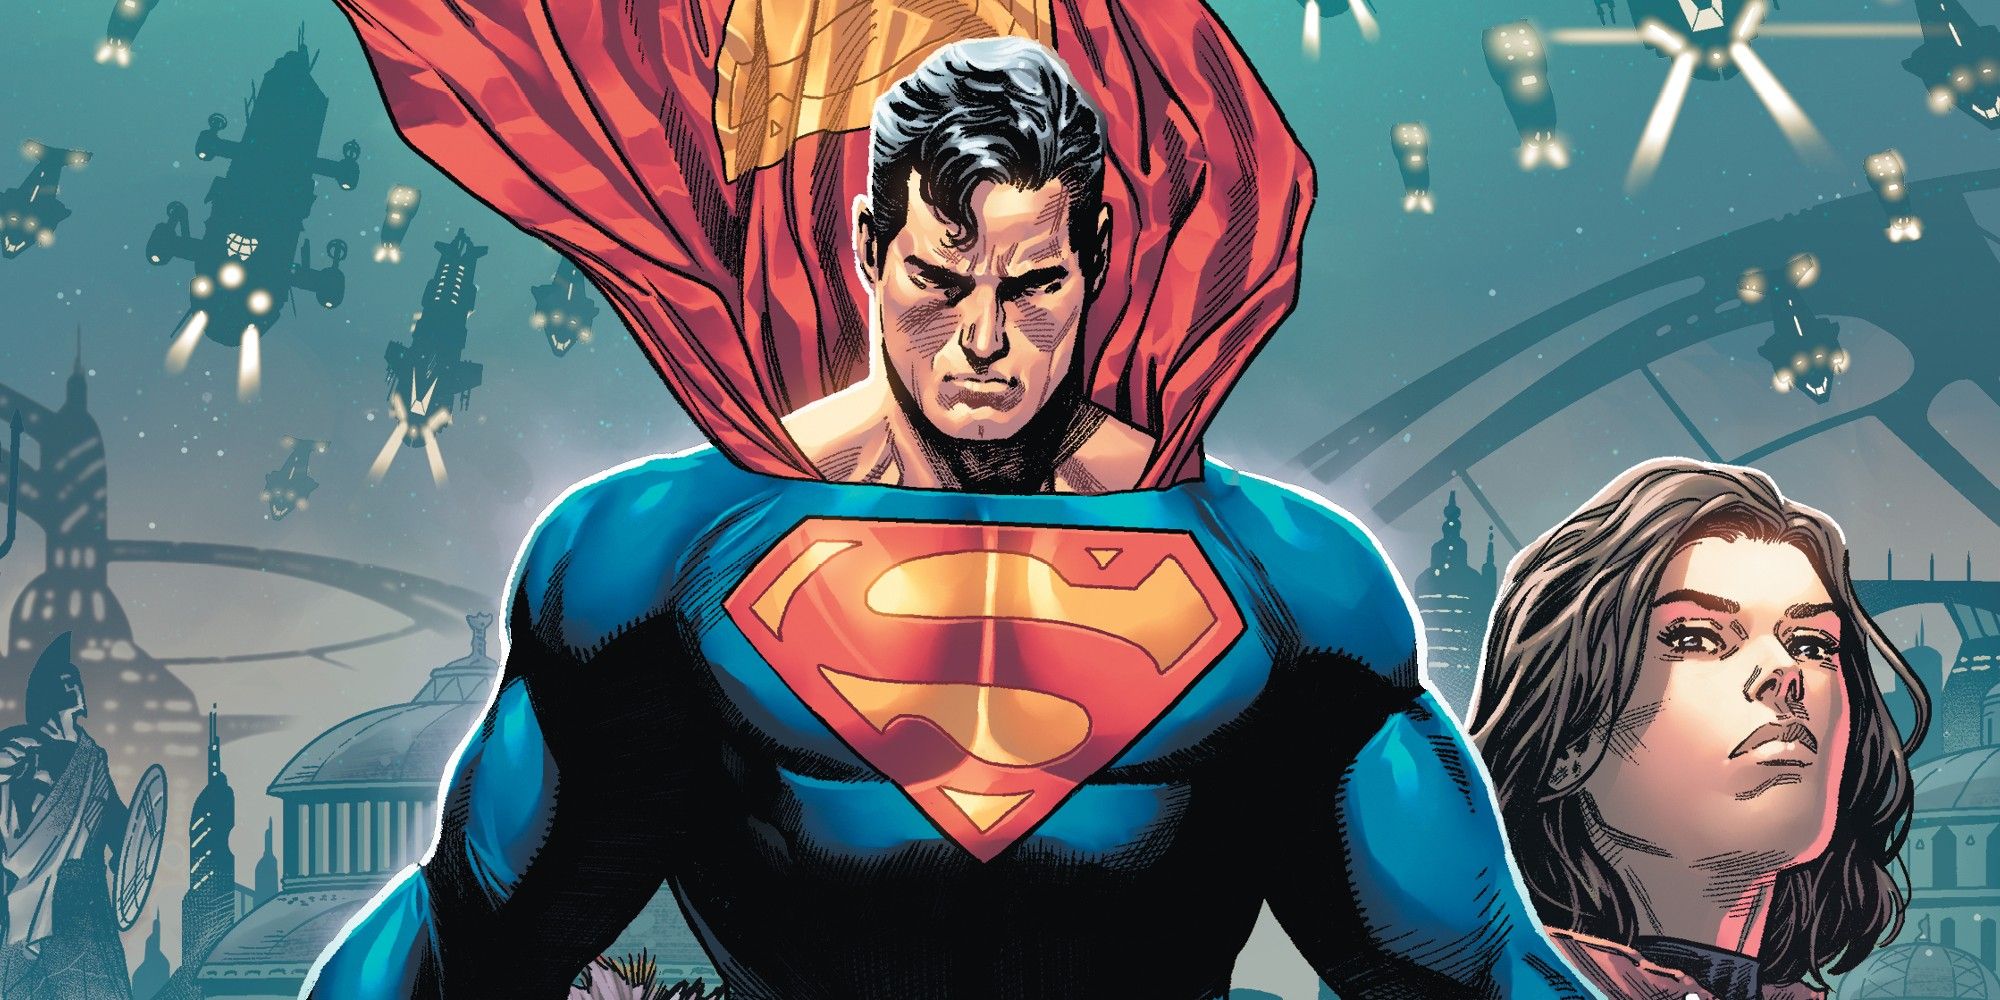 Superman Comic Cover